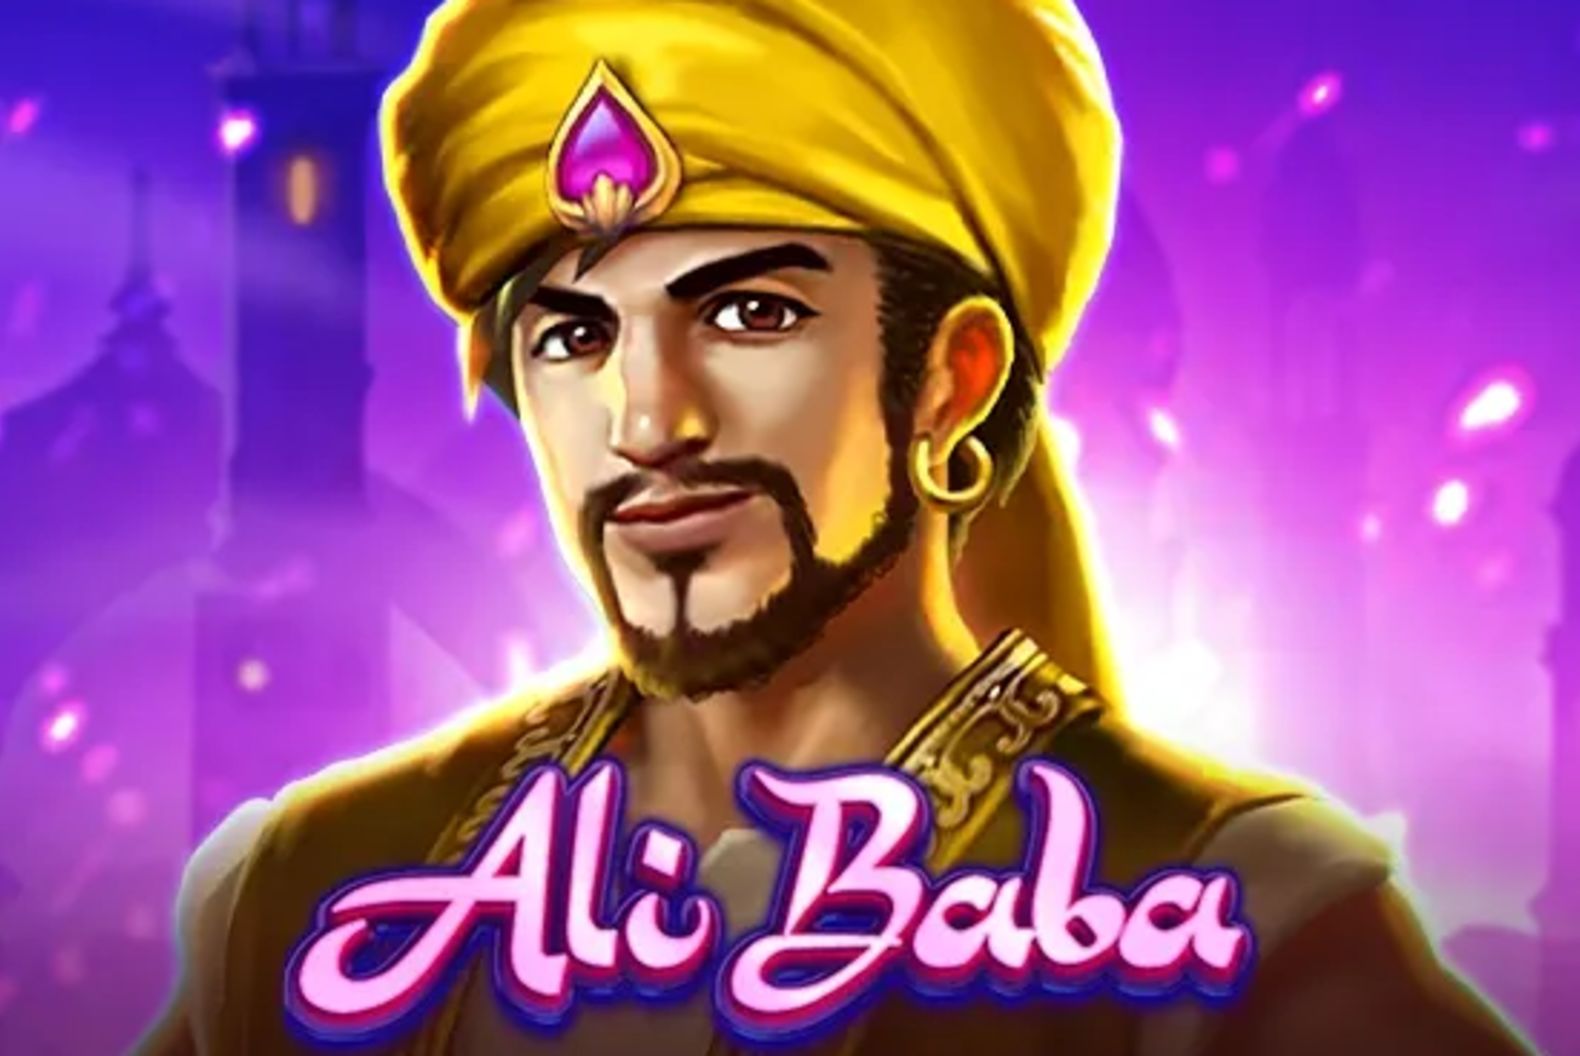 Ali BaBa